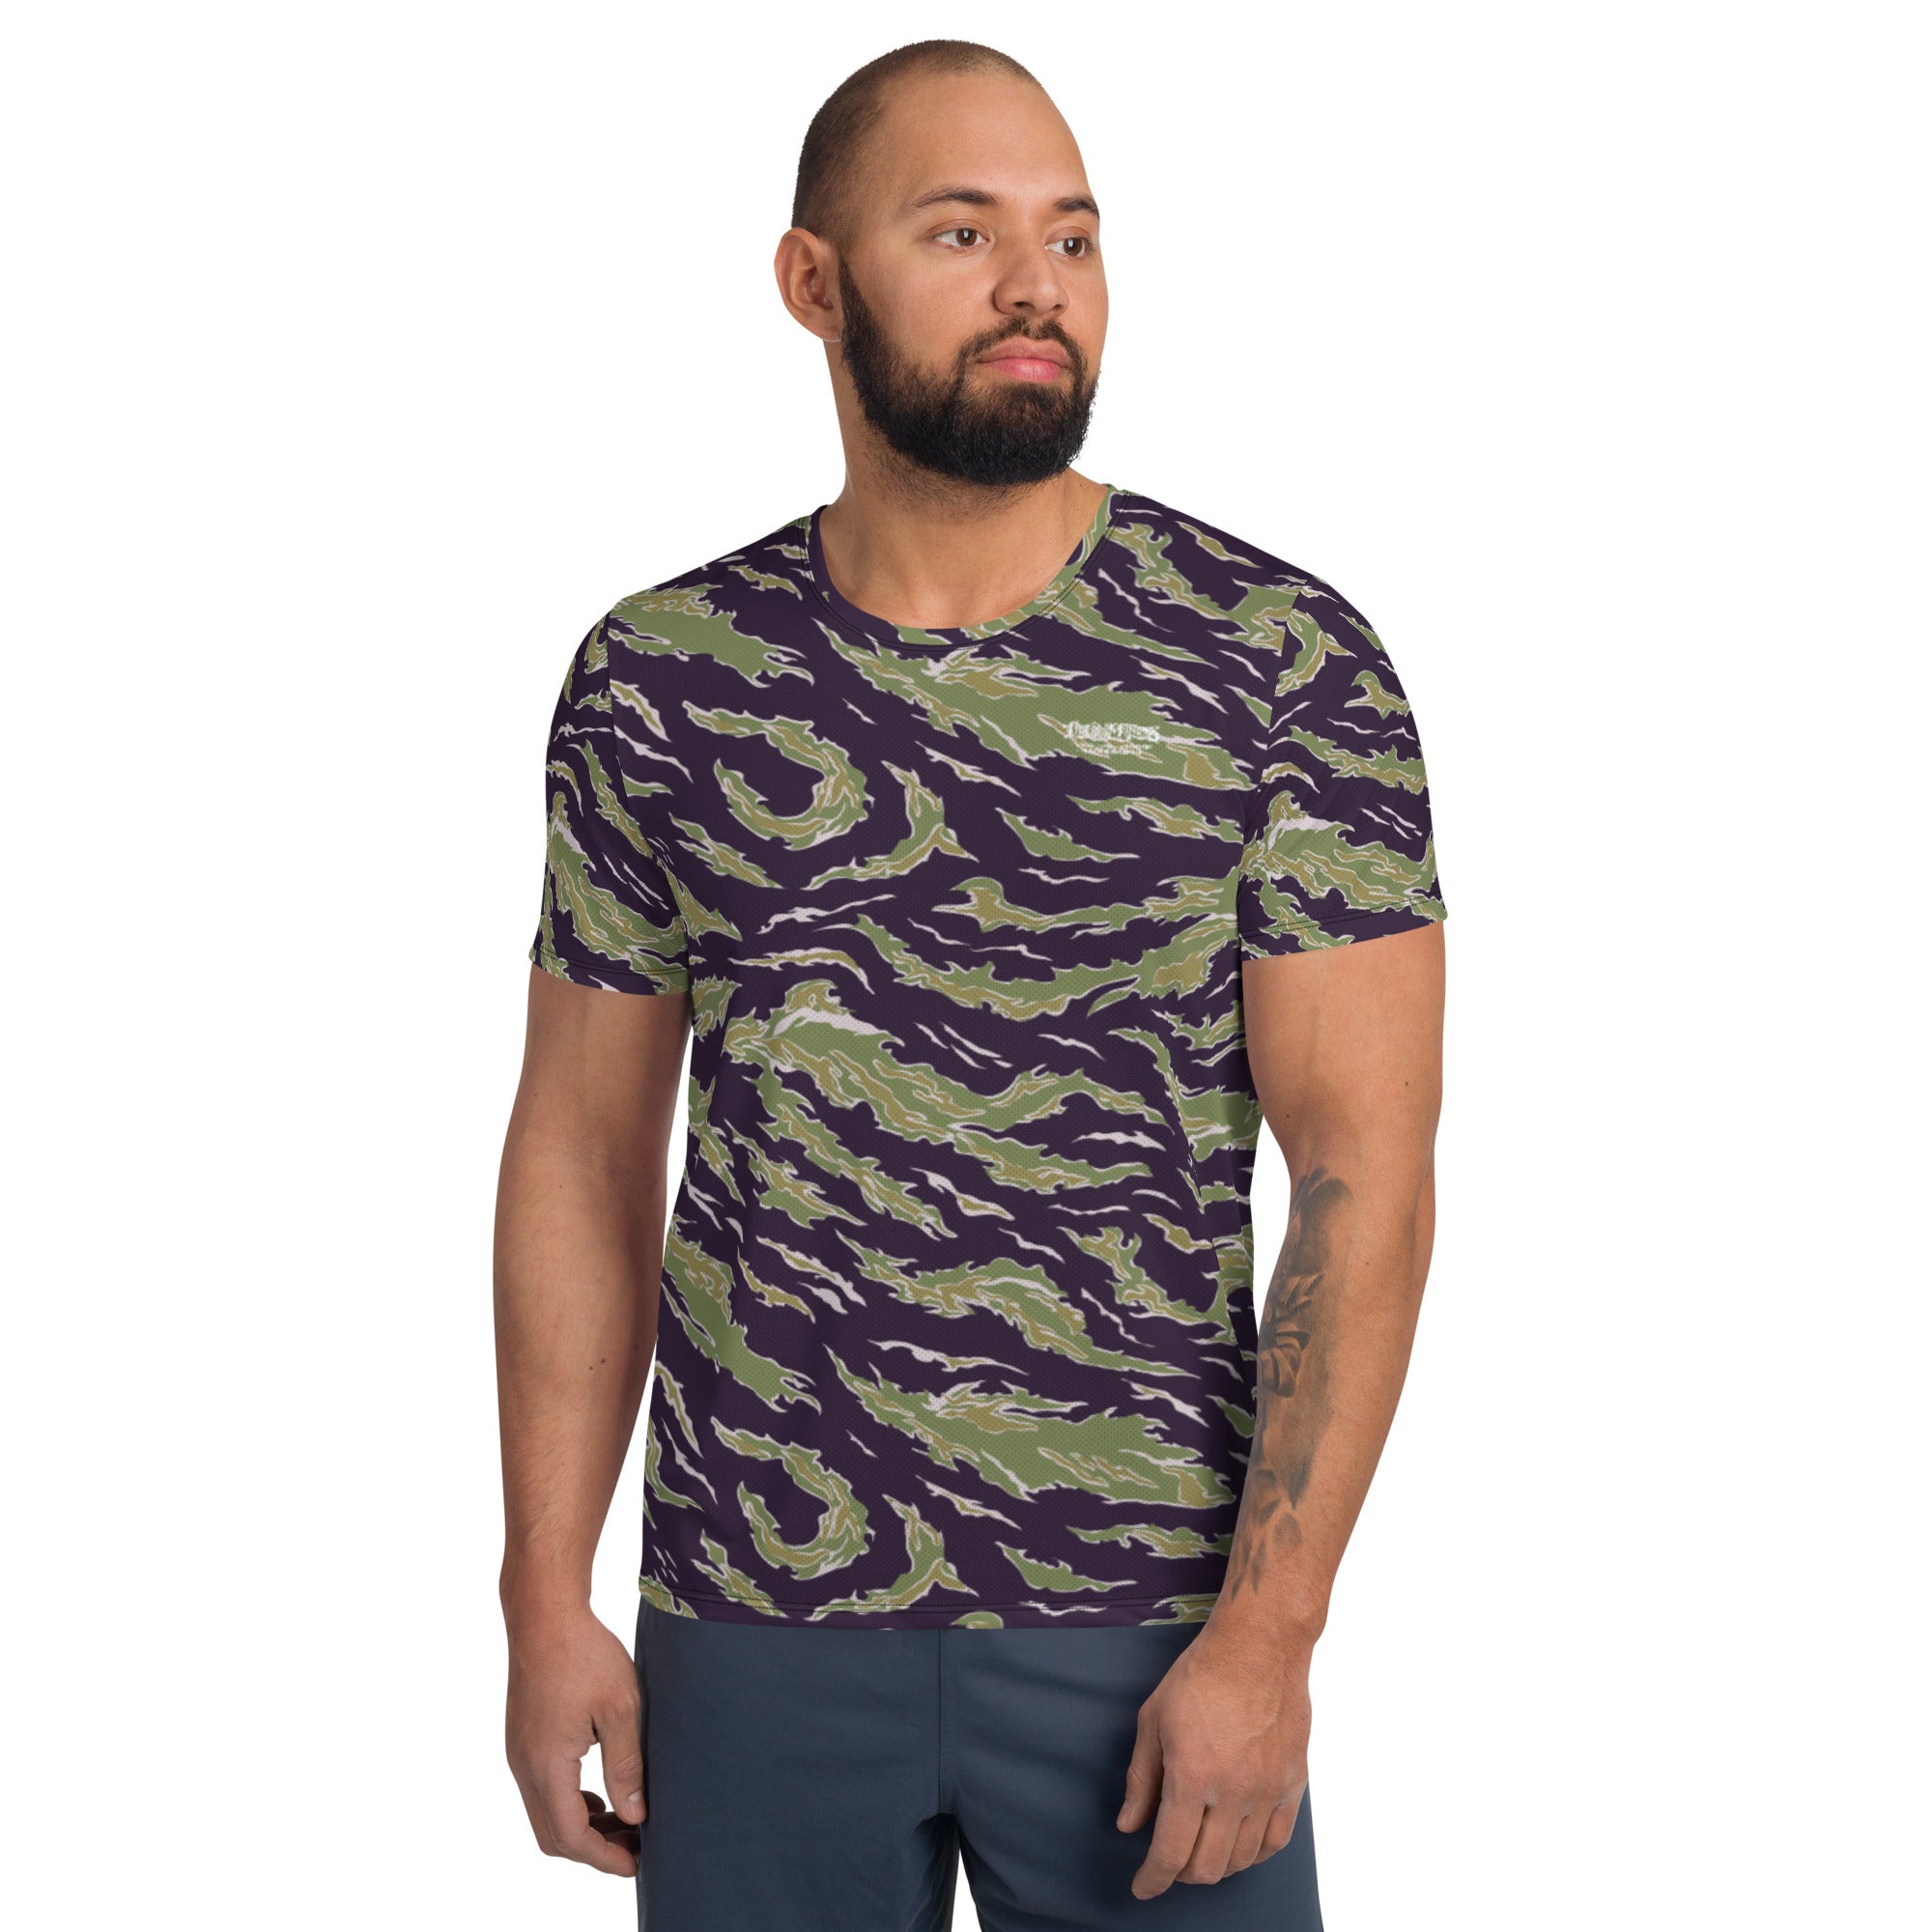 Tiger Stripe Jungle Camouflage Athletic Performance Shorts Sleeve T-Shirt